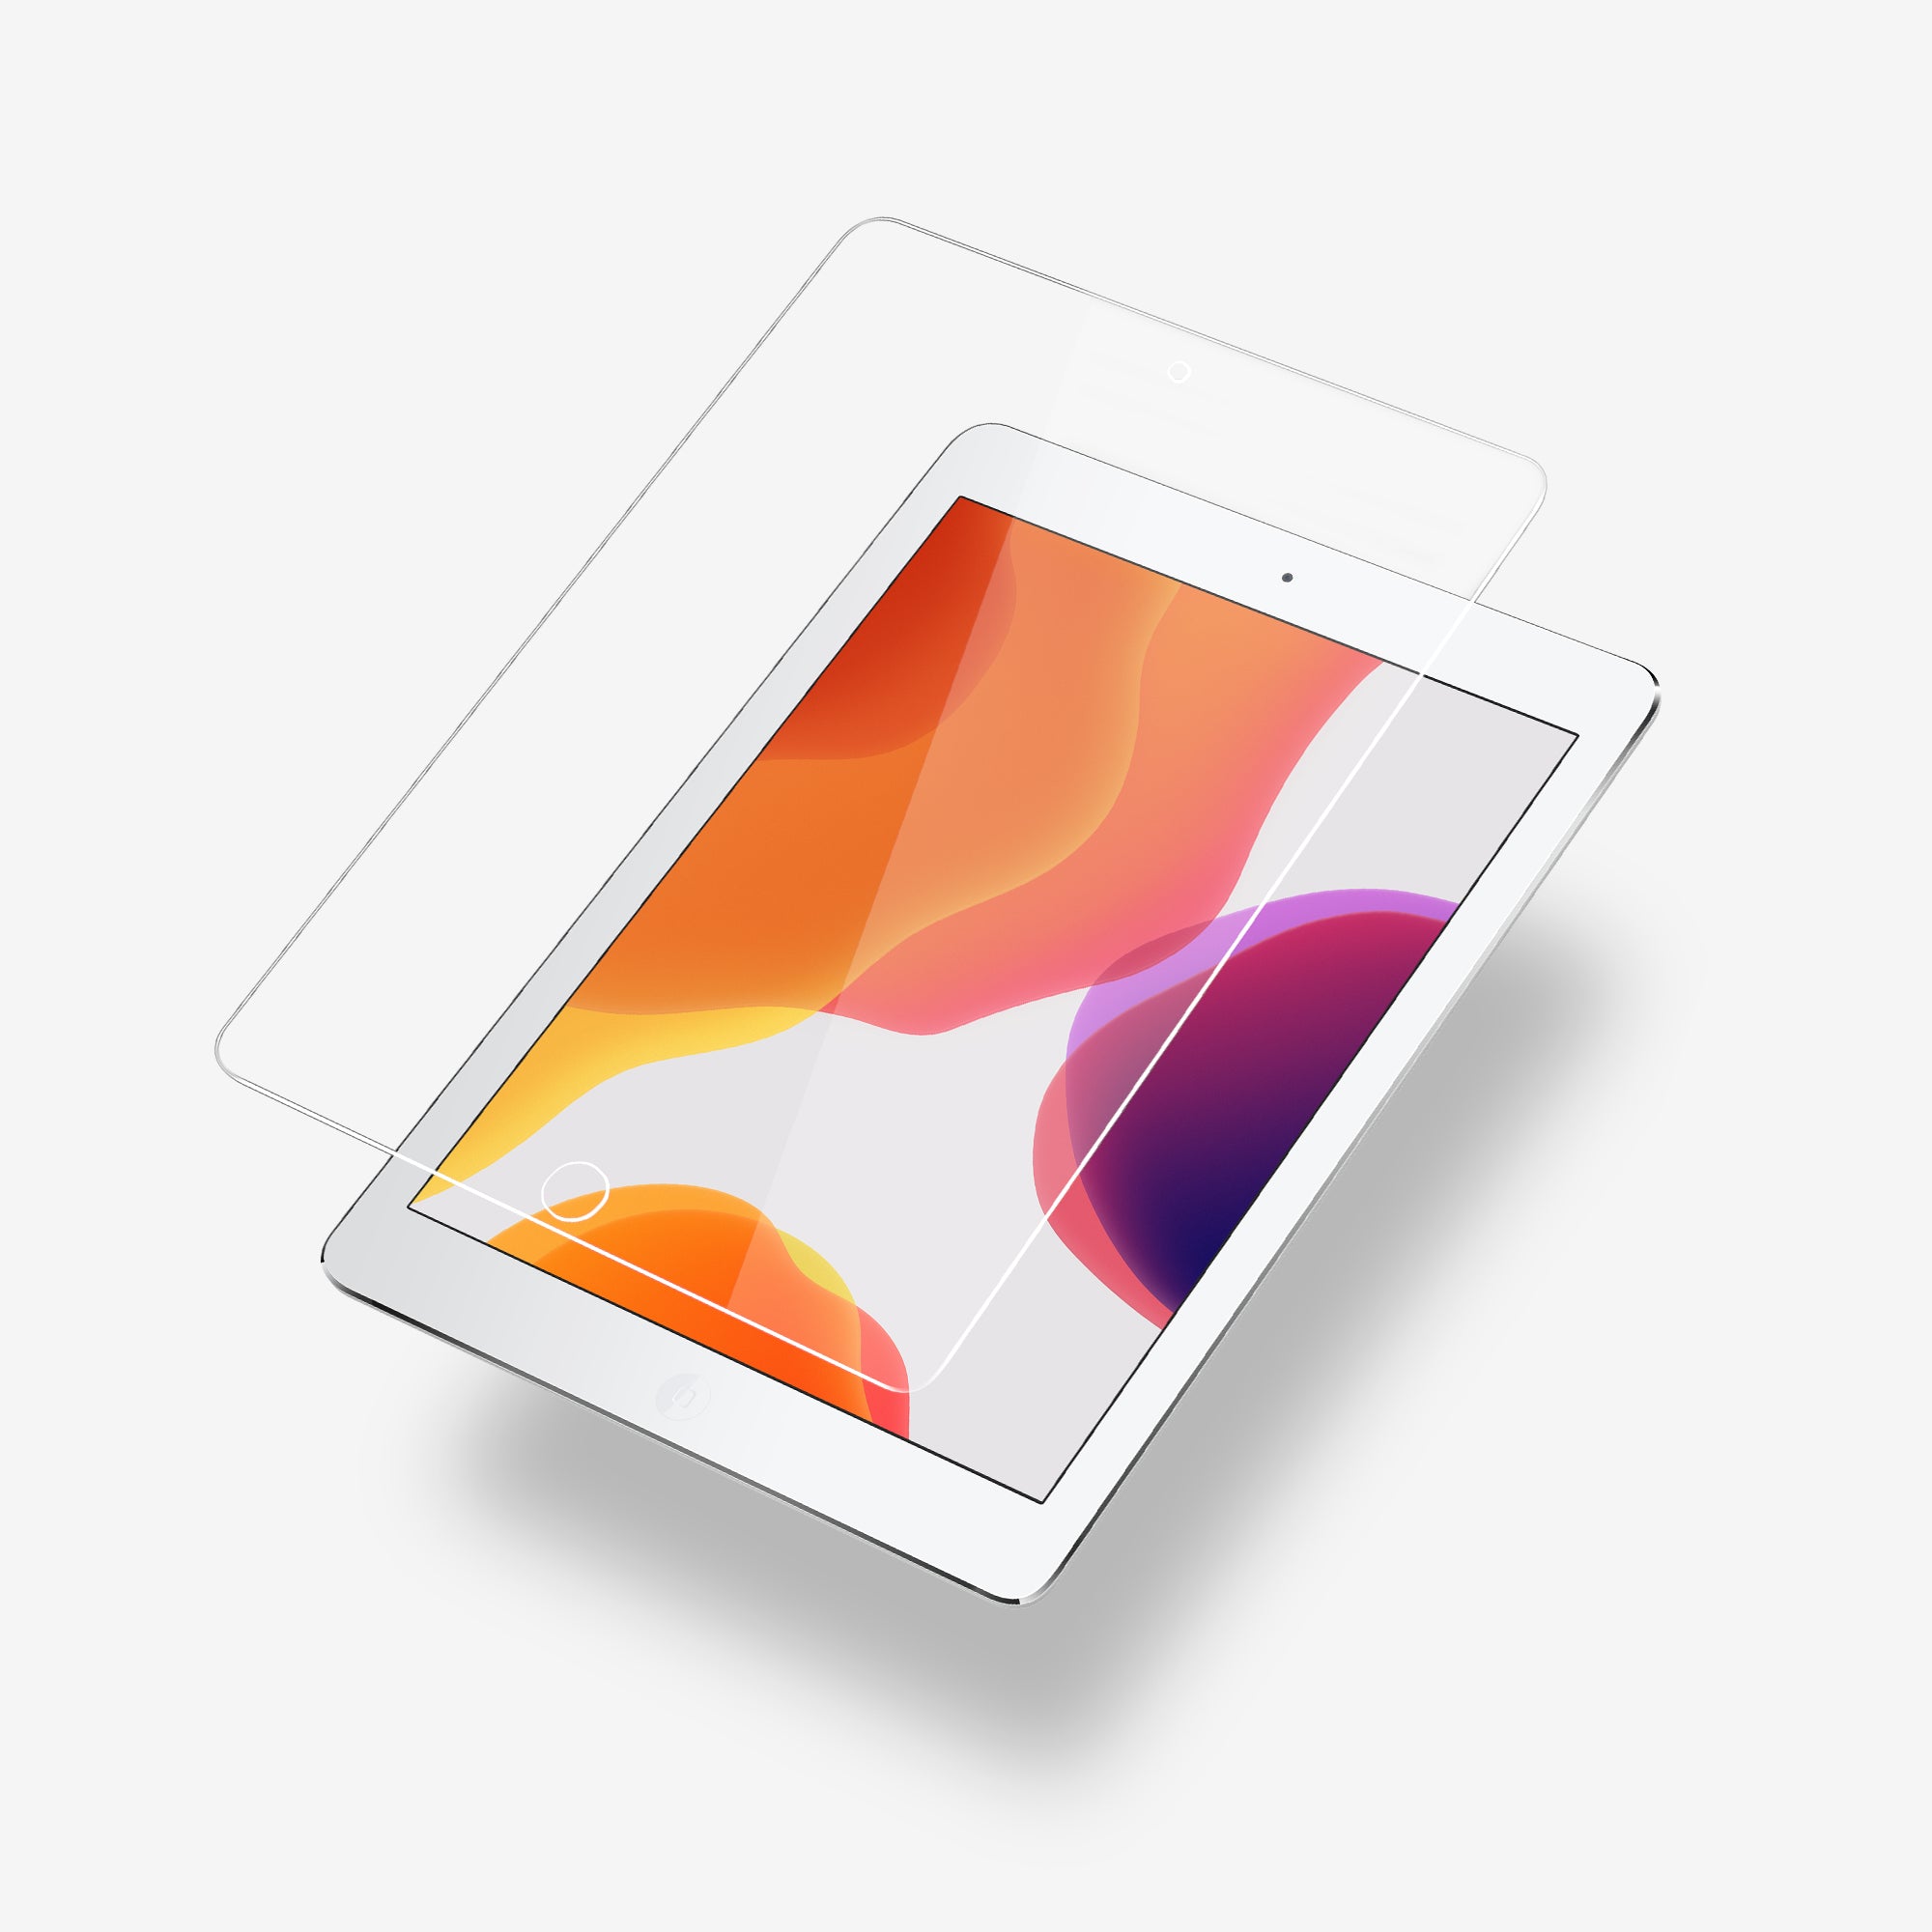 NanoArmour 10.2-inch iPad 7 Screen Protector